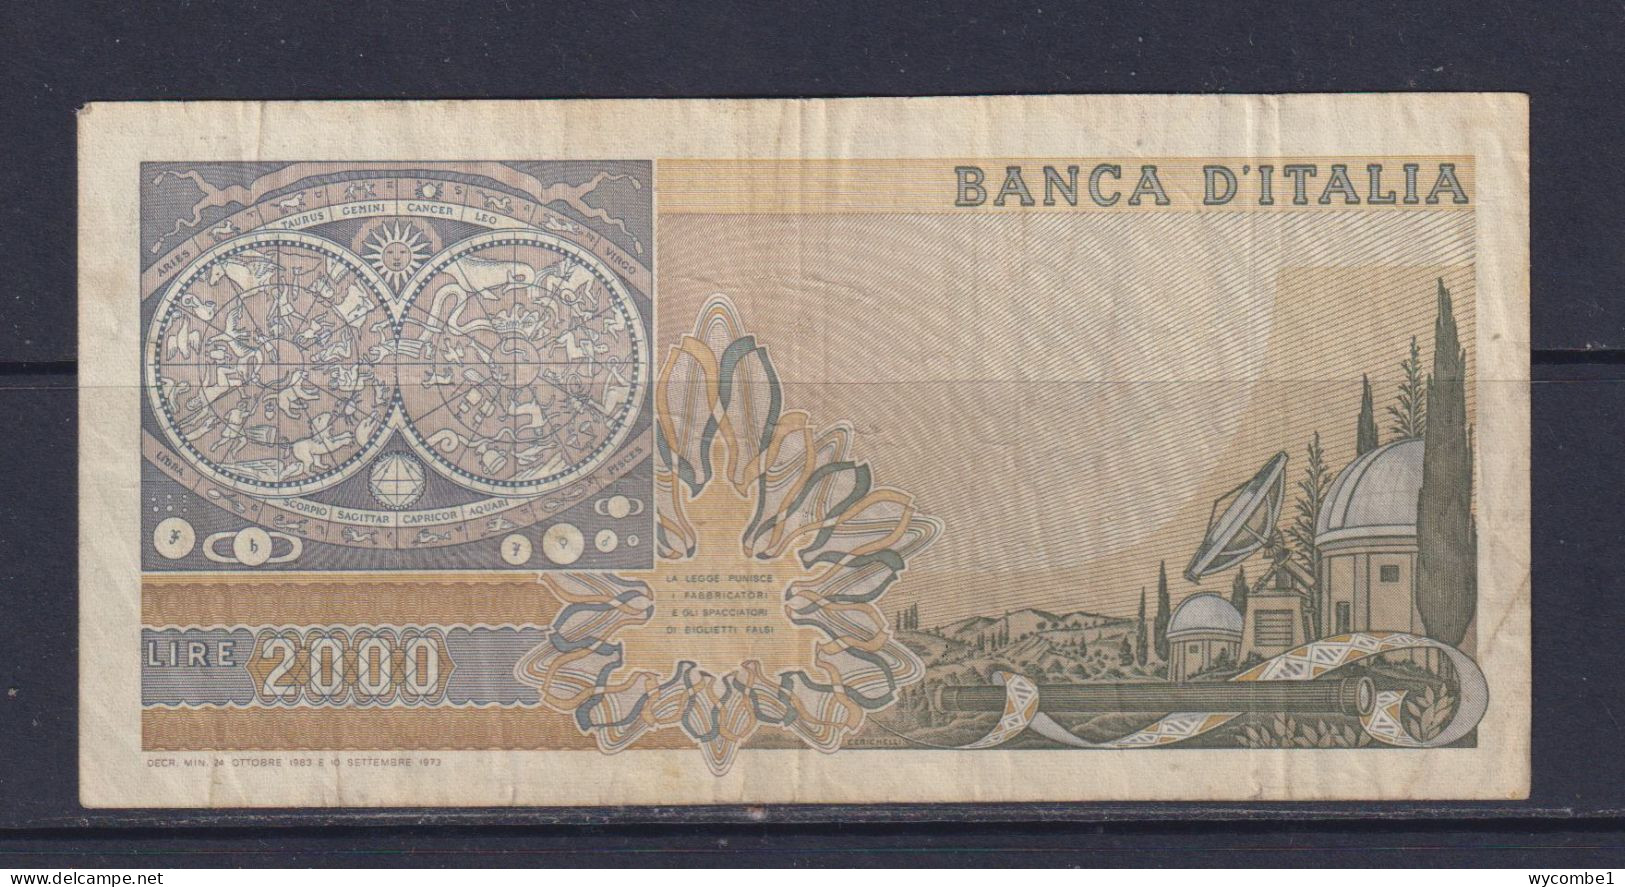 ITALY - 1983 2000 Lira Circulated Banknote - 2.000 Lire